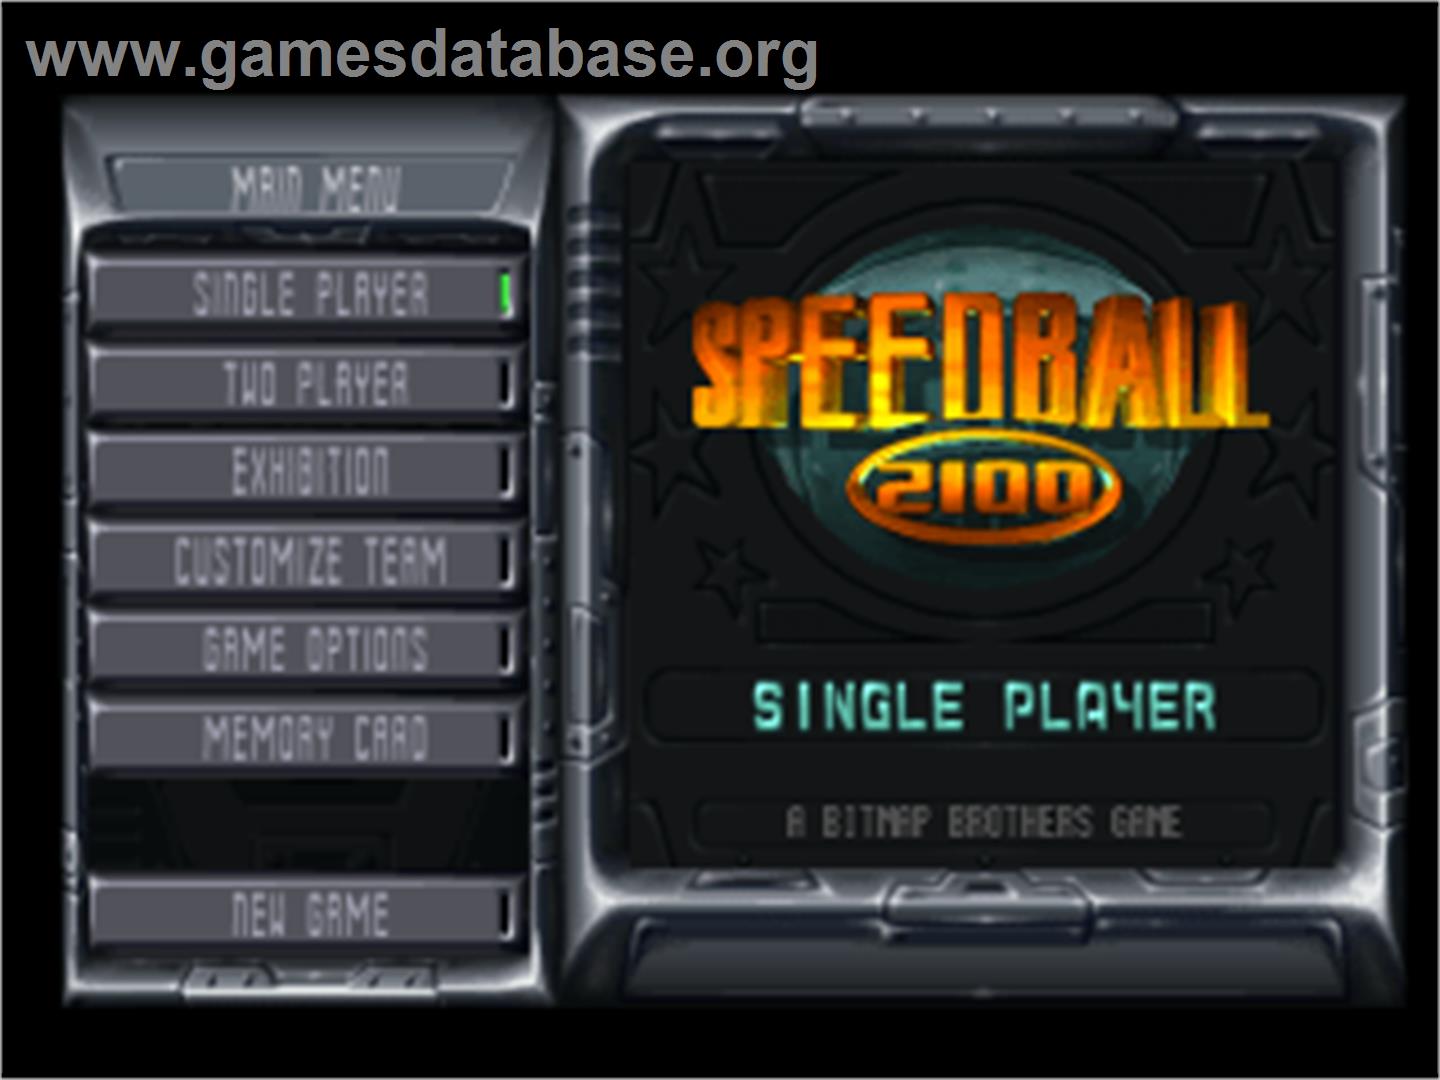 Speedball 2100 - Sony Playstation - Artwork - Title Screen